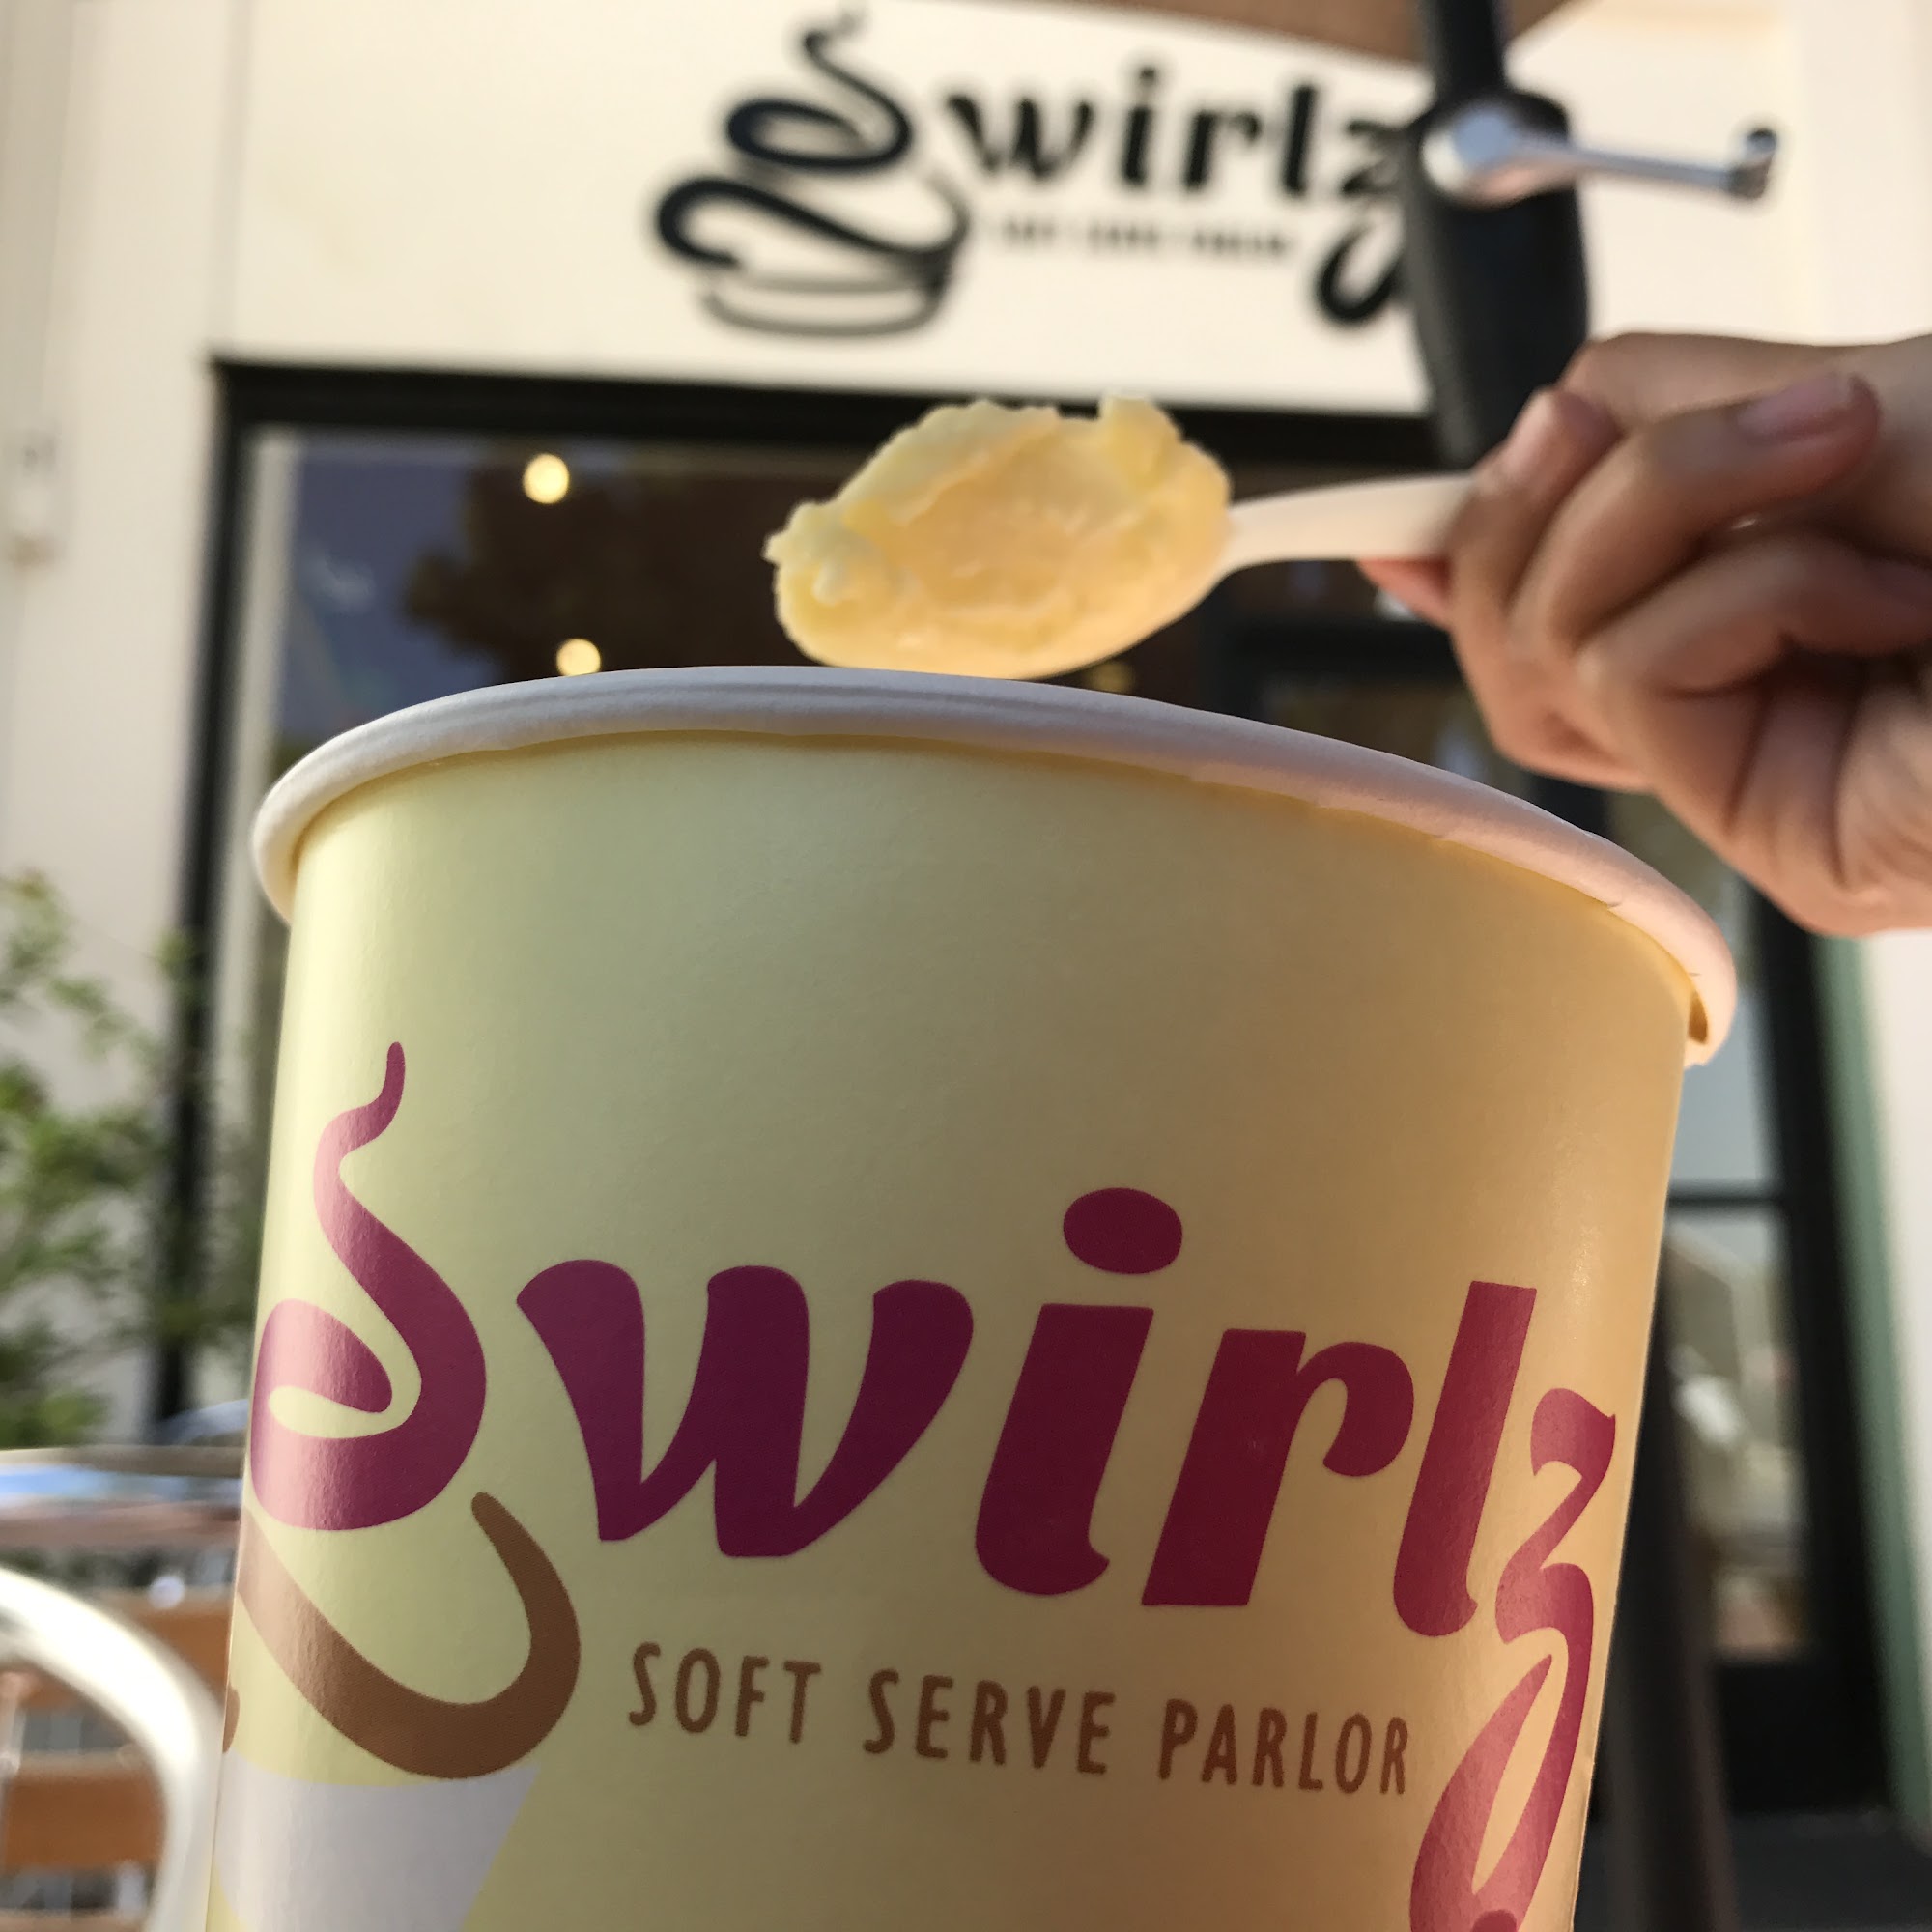 Swirlz Soft Serve Parlor